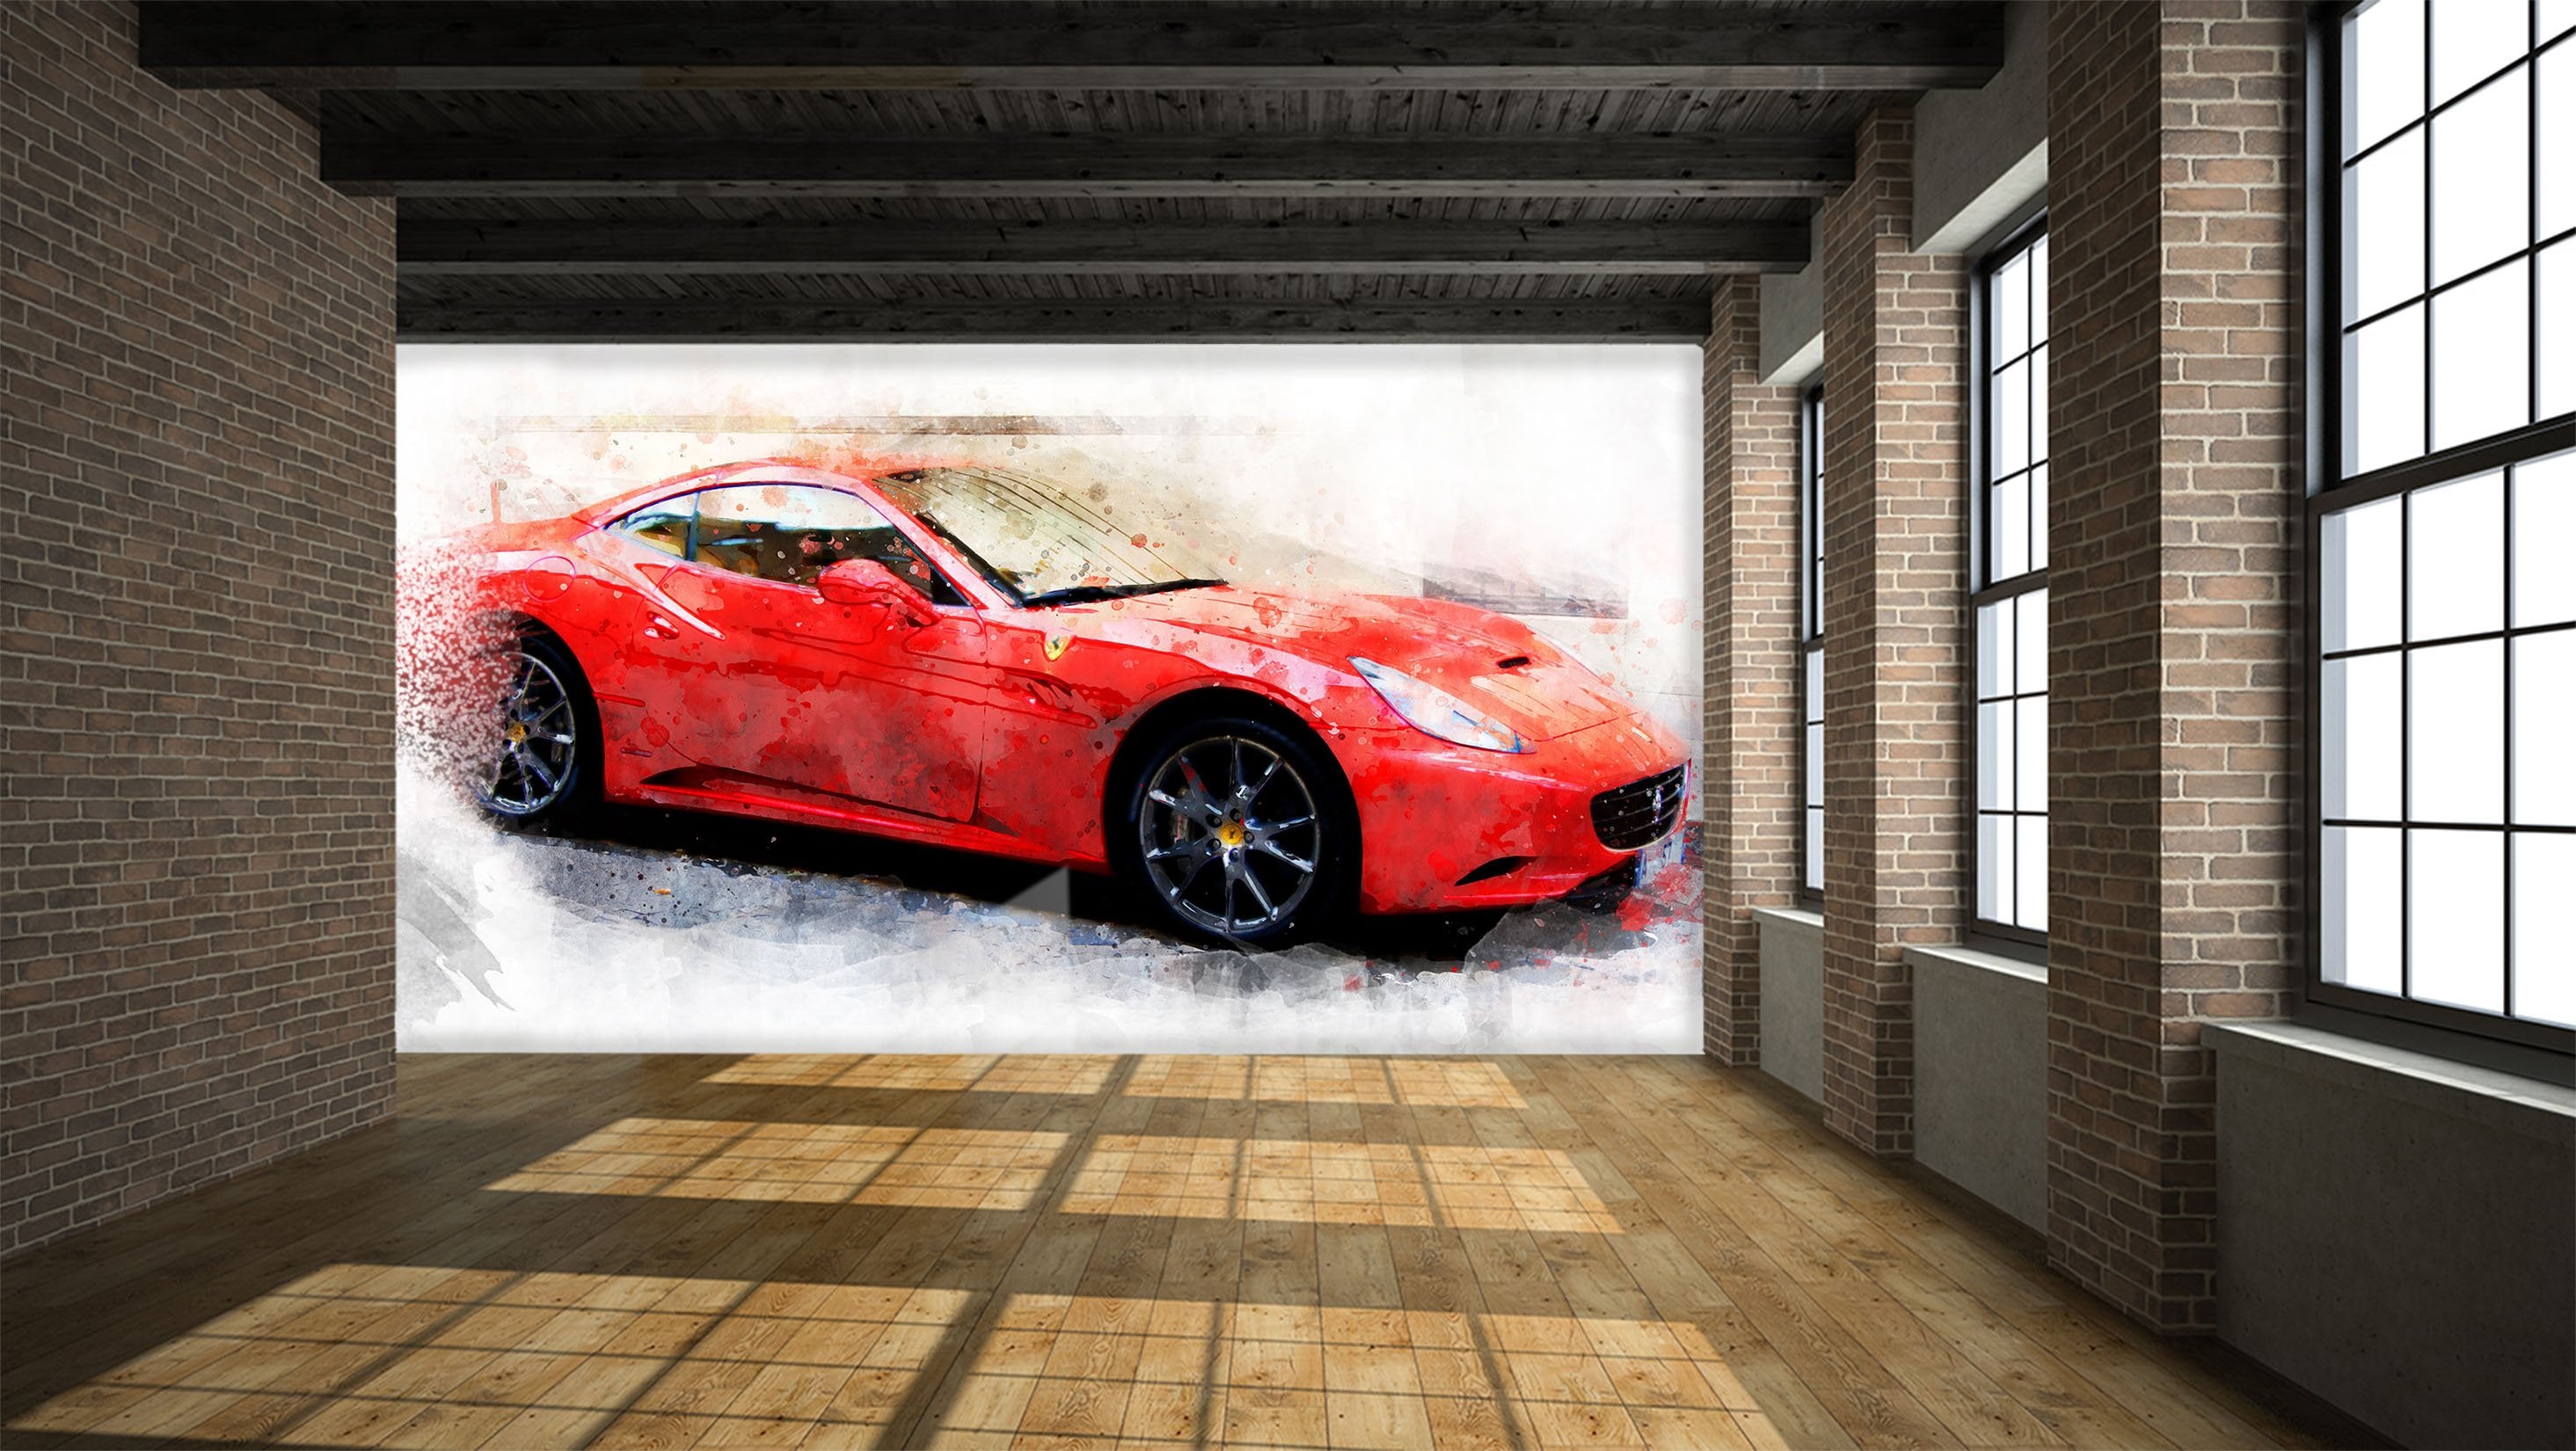 3D Red Car 945 Vehicle Wall Murals Wallpaper AJ Wallpaper 2 